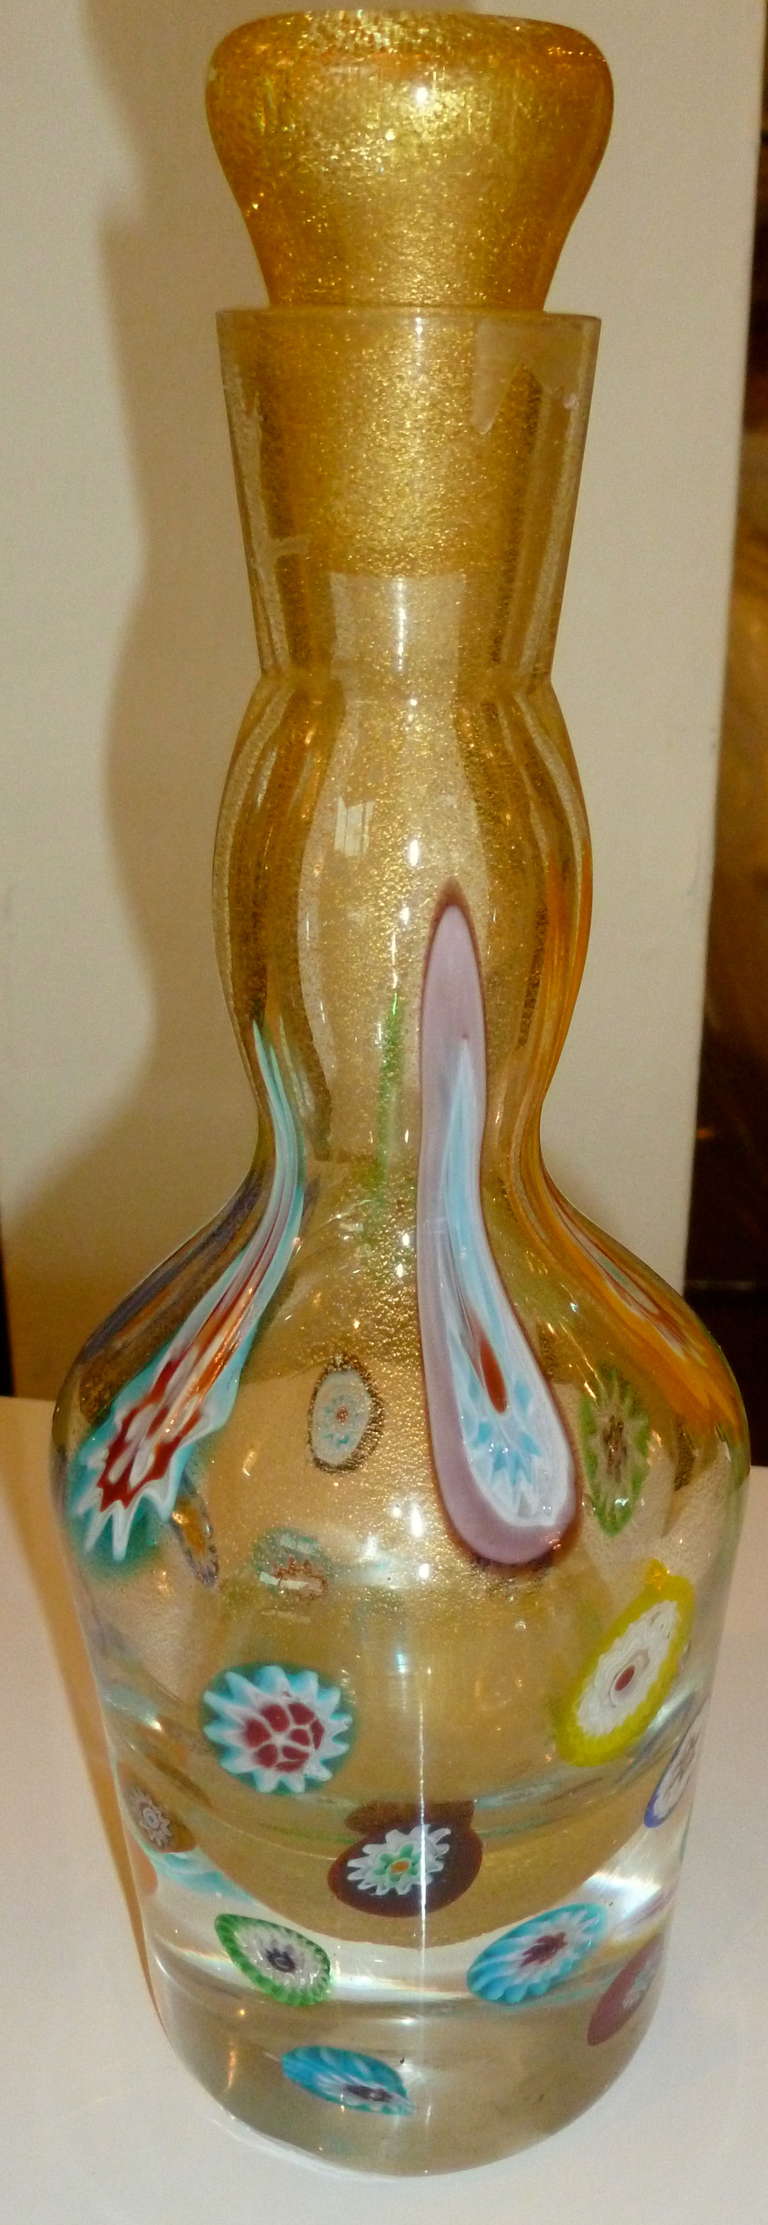 Italian Fratelli Toso Murano Glass Decanter Perfume Bottle Gold Aventurine and
Murrhines For Sale